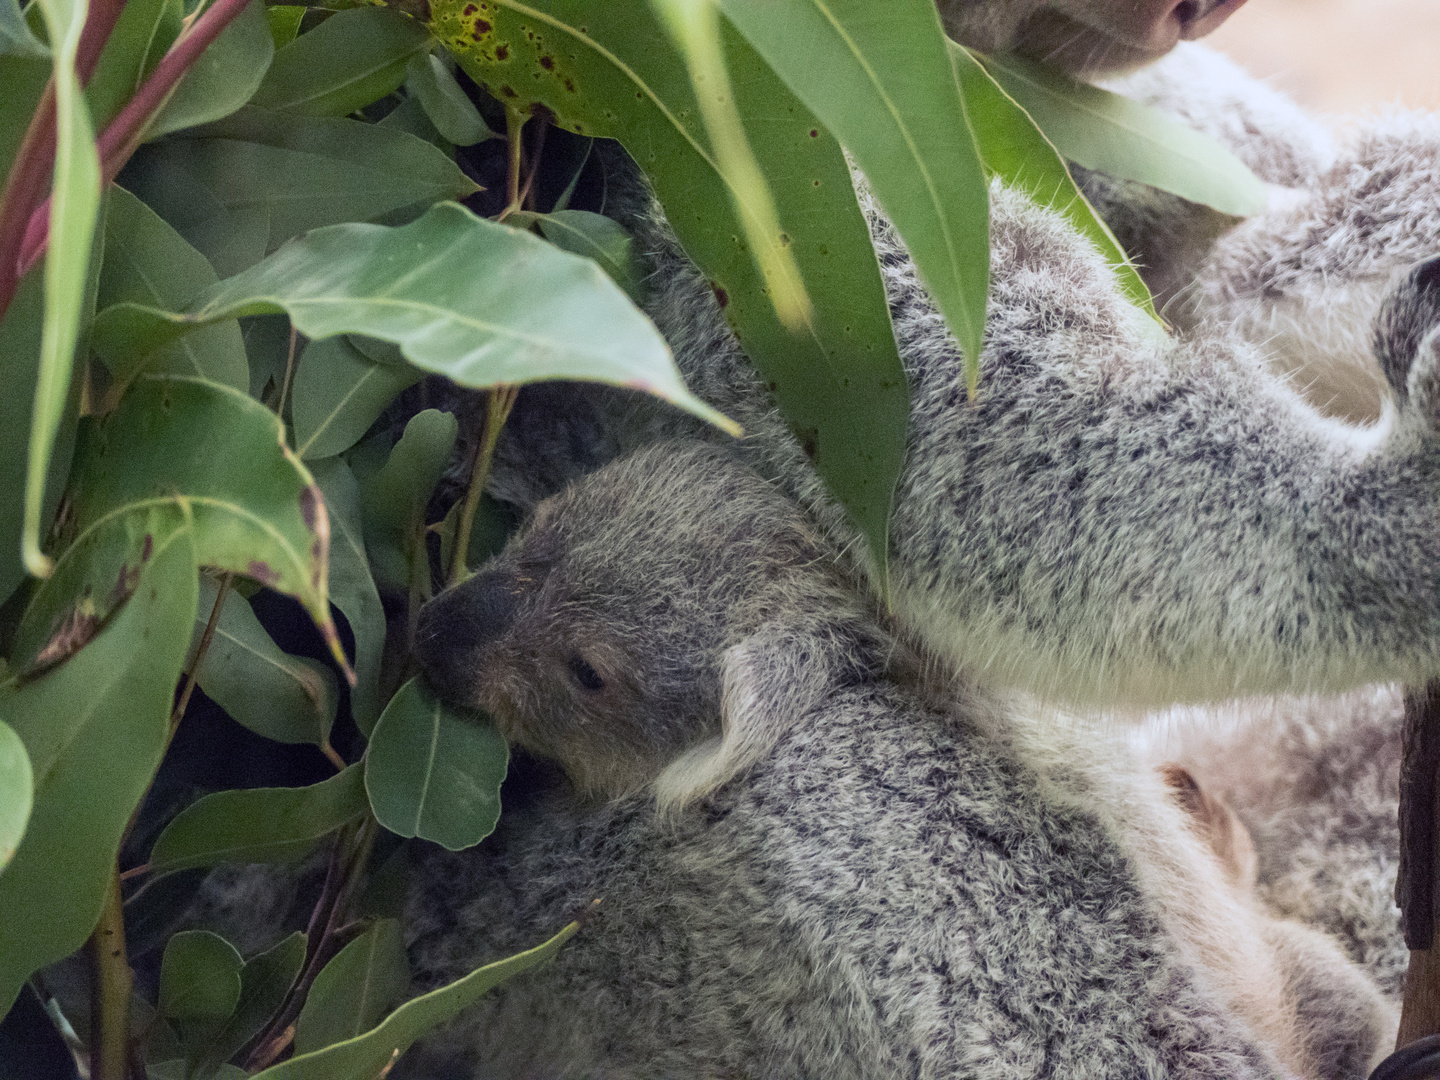 Koalanachwuchs 